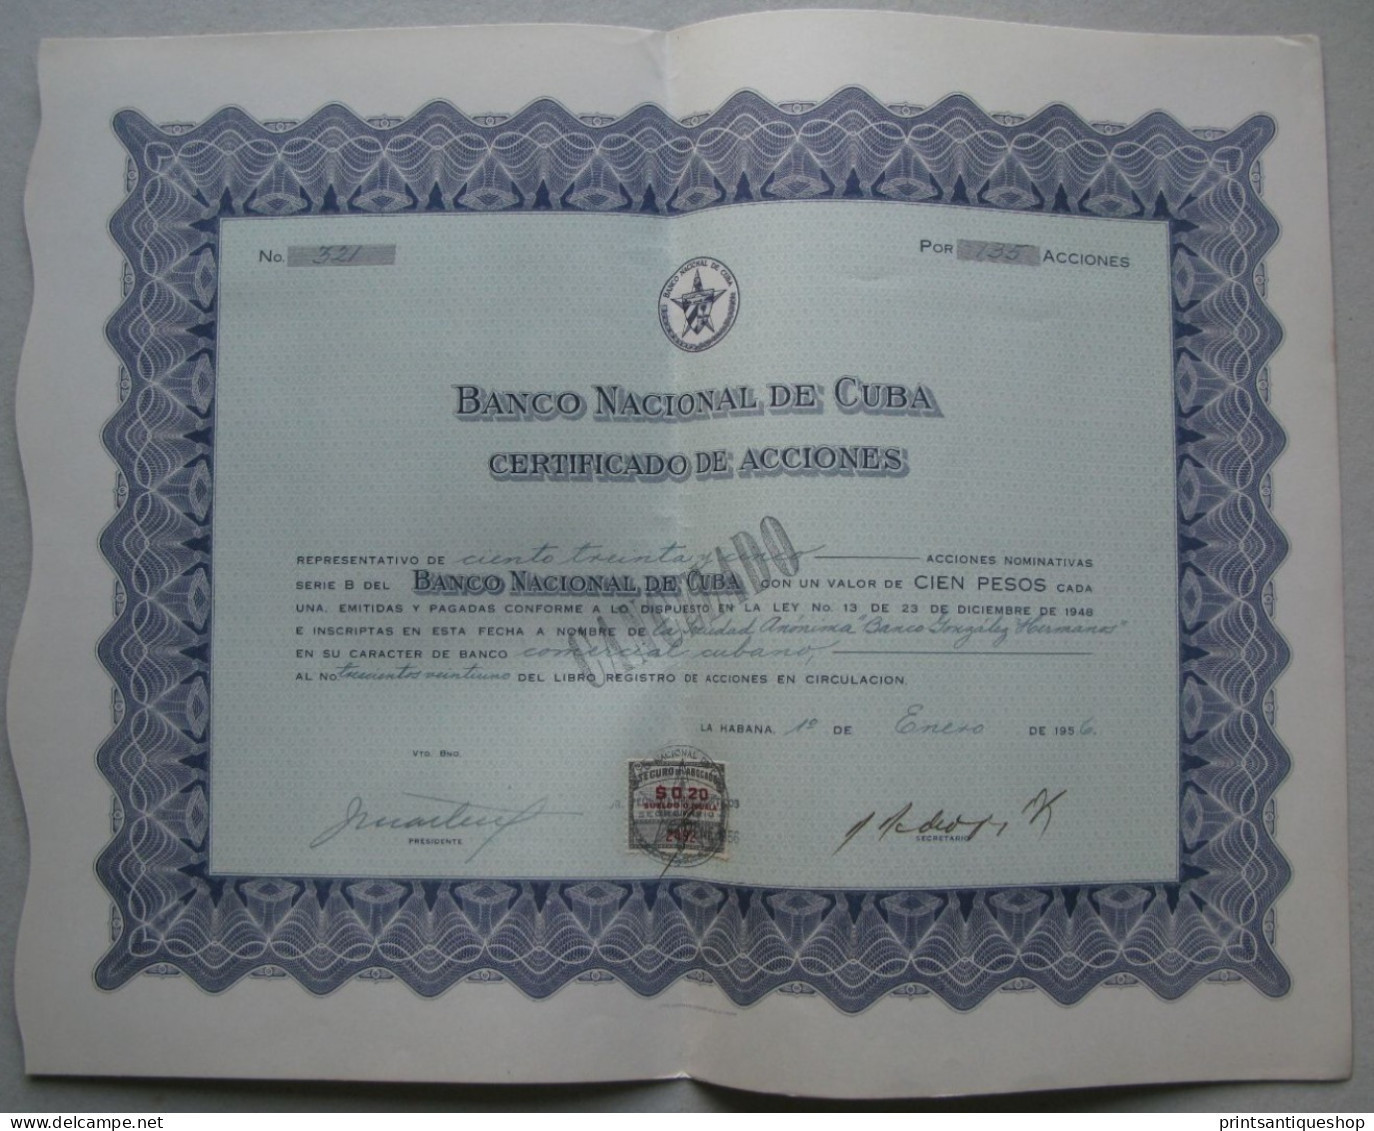 1956 Banco Nacional De Cuba Emprunt Aktie Obligation Bond BONO Certificate $100 Habana Havana In Spanish - Banque & Assurance